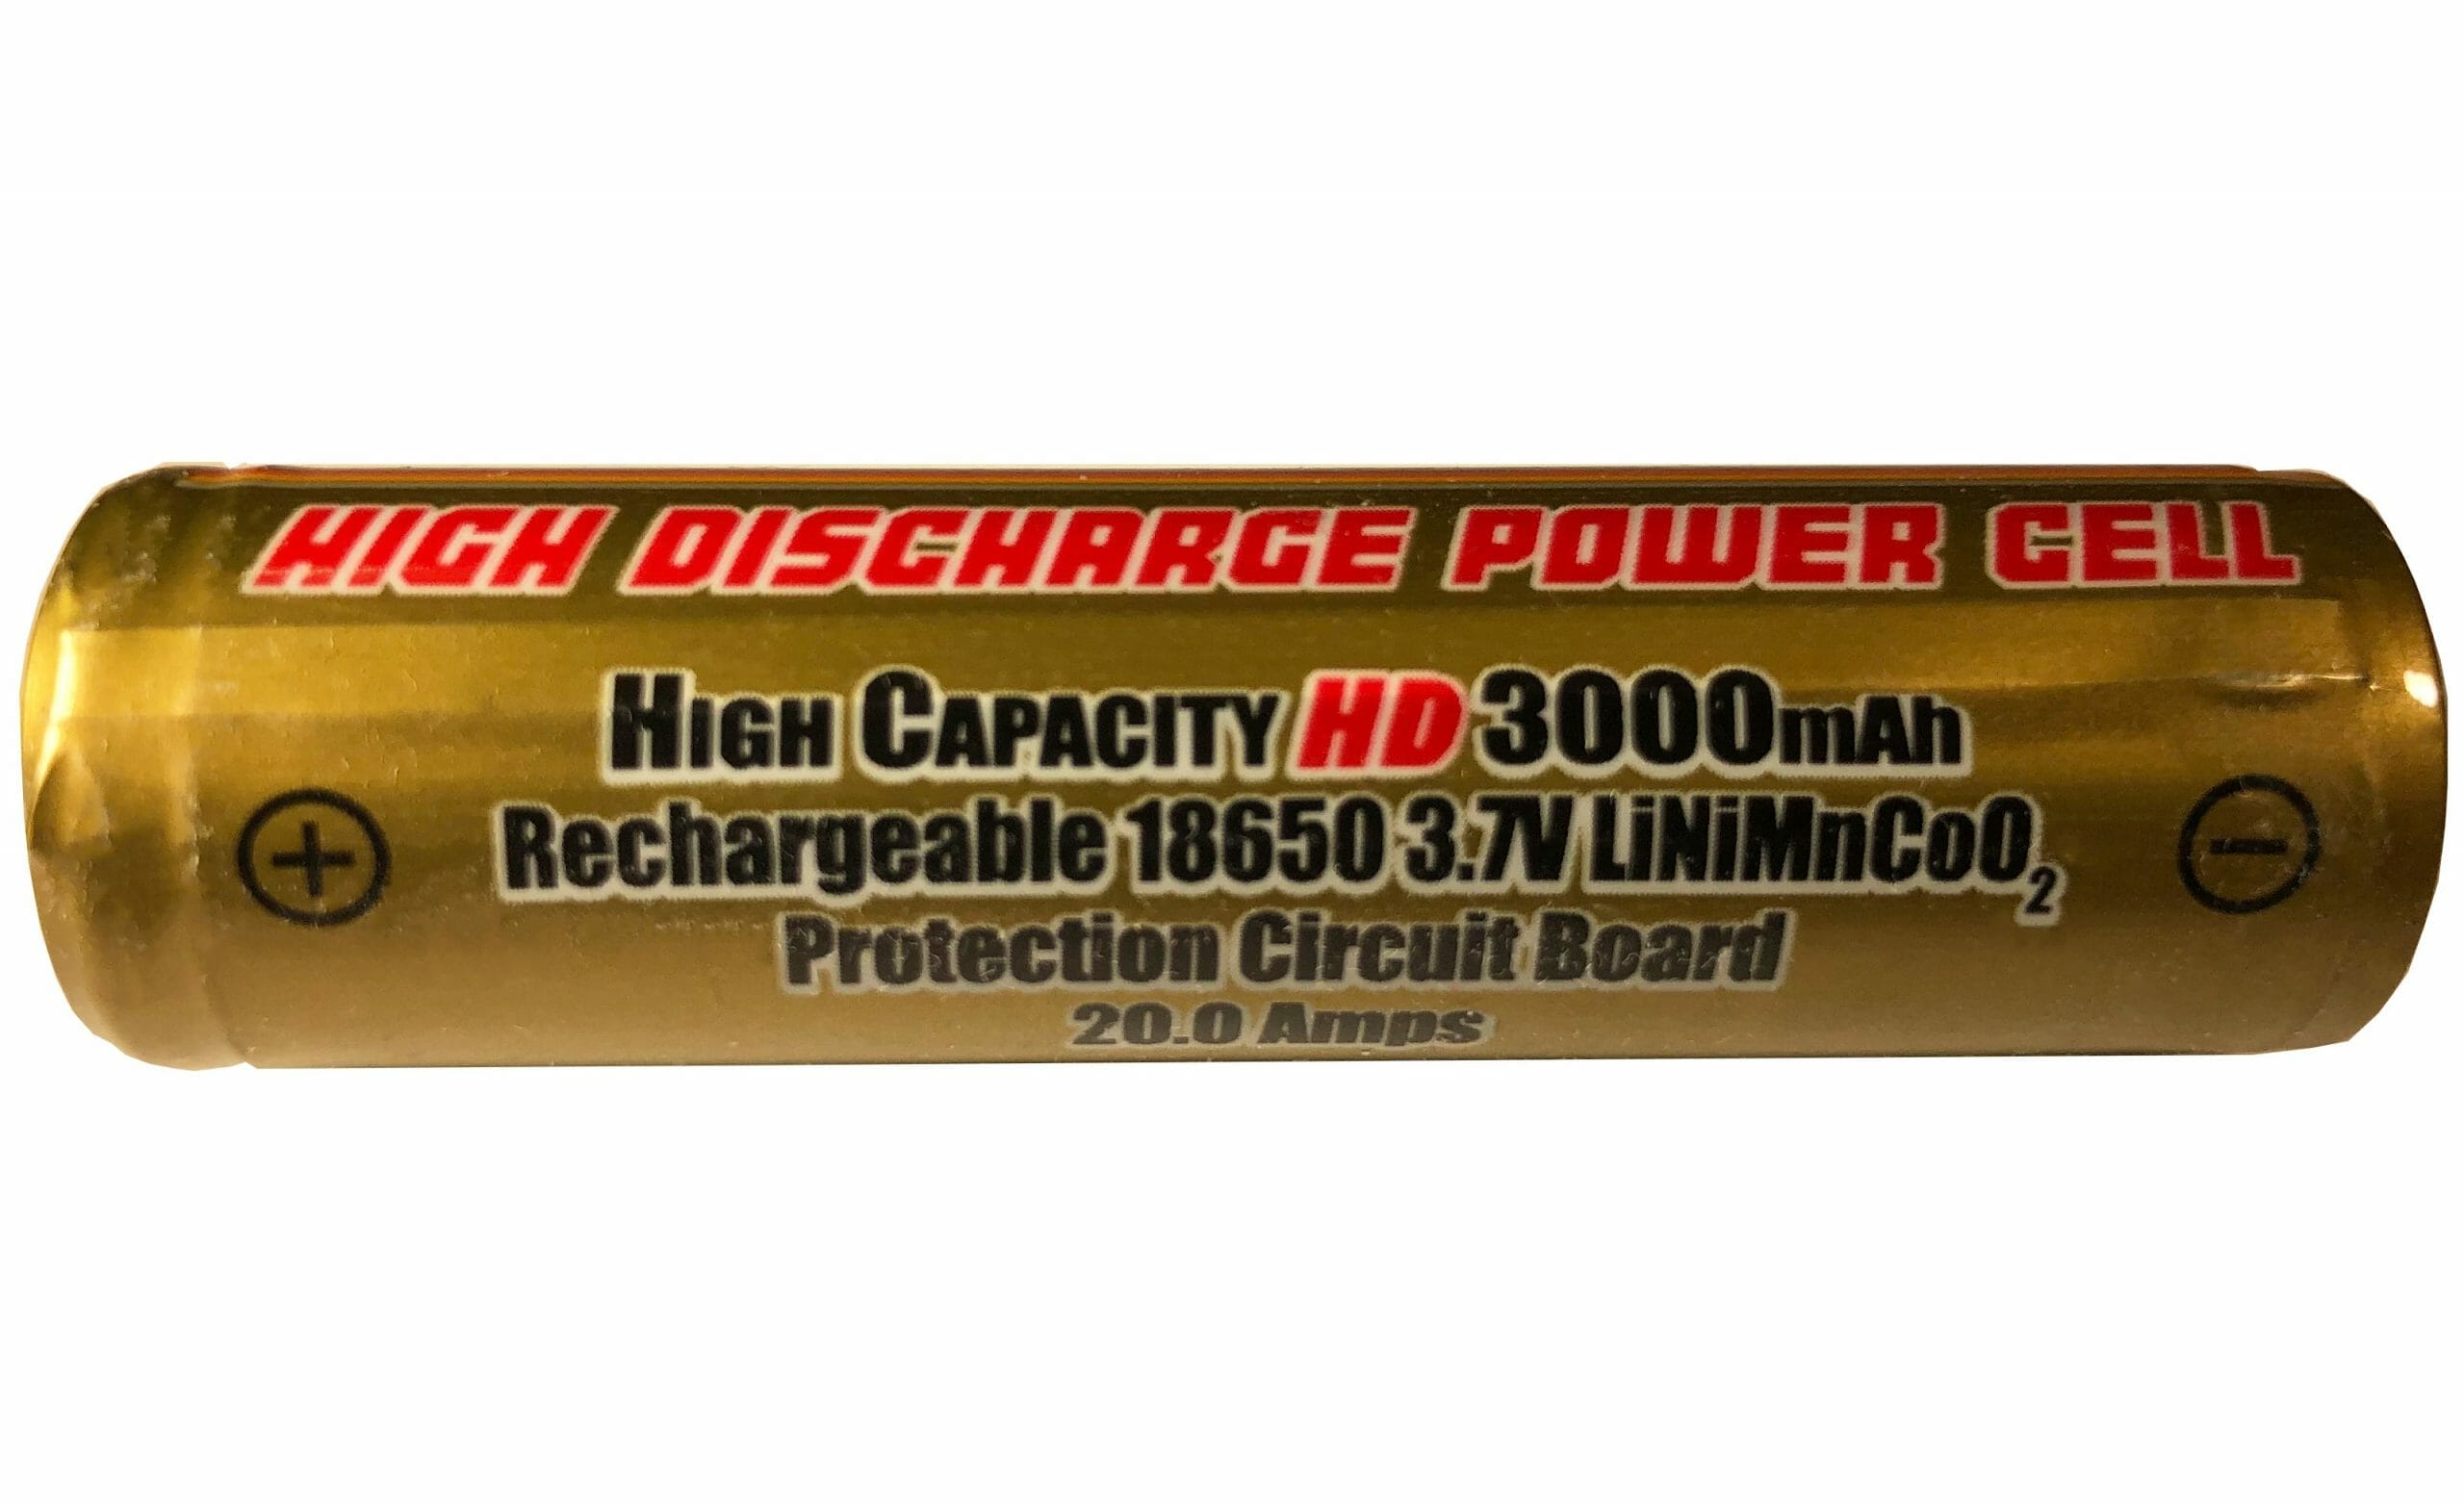 Intens væg Skøn High Discharge 3000mAh, 3.7v, 20A 18650 LiNiMnCo02 Rechargeable Battery -  MF Tactical